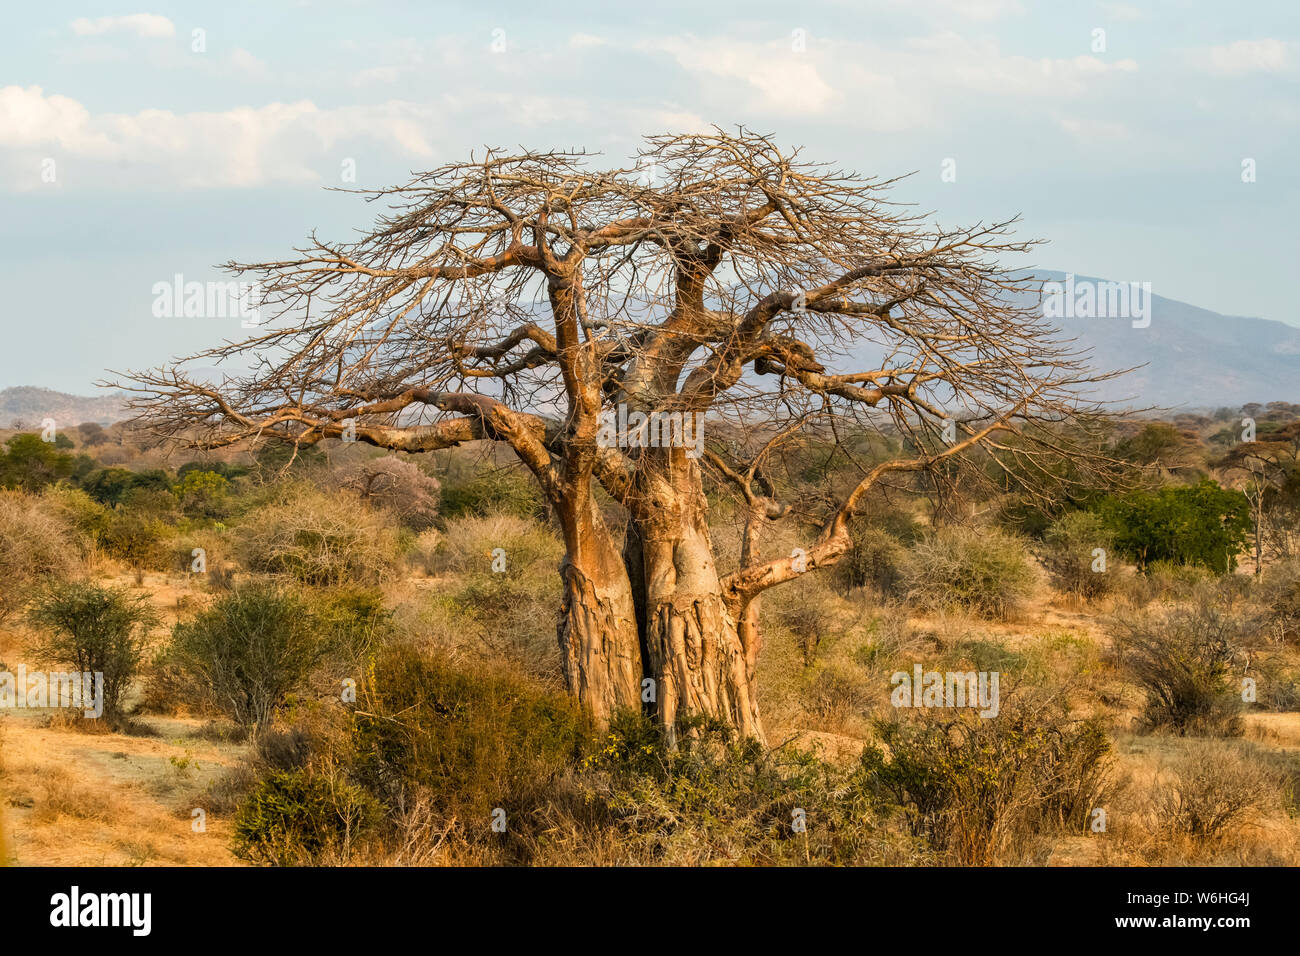 Leafless Baobab tree (Adansonia Digitata) with trunk scarred by Elephants in Ruaha National Park; Tanzania Stock Photo